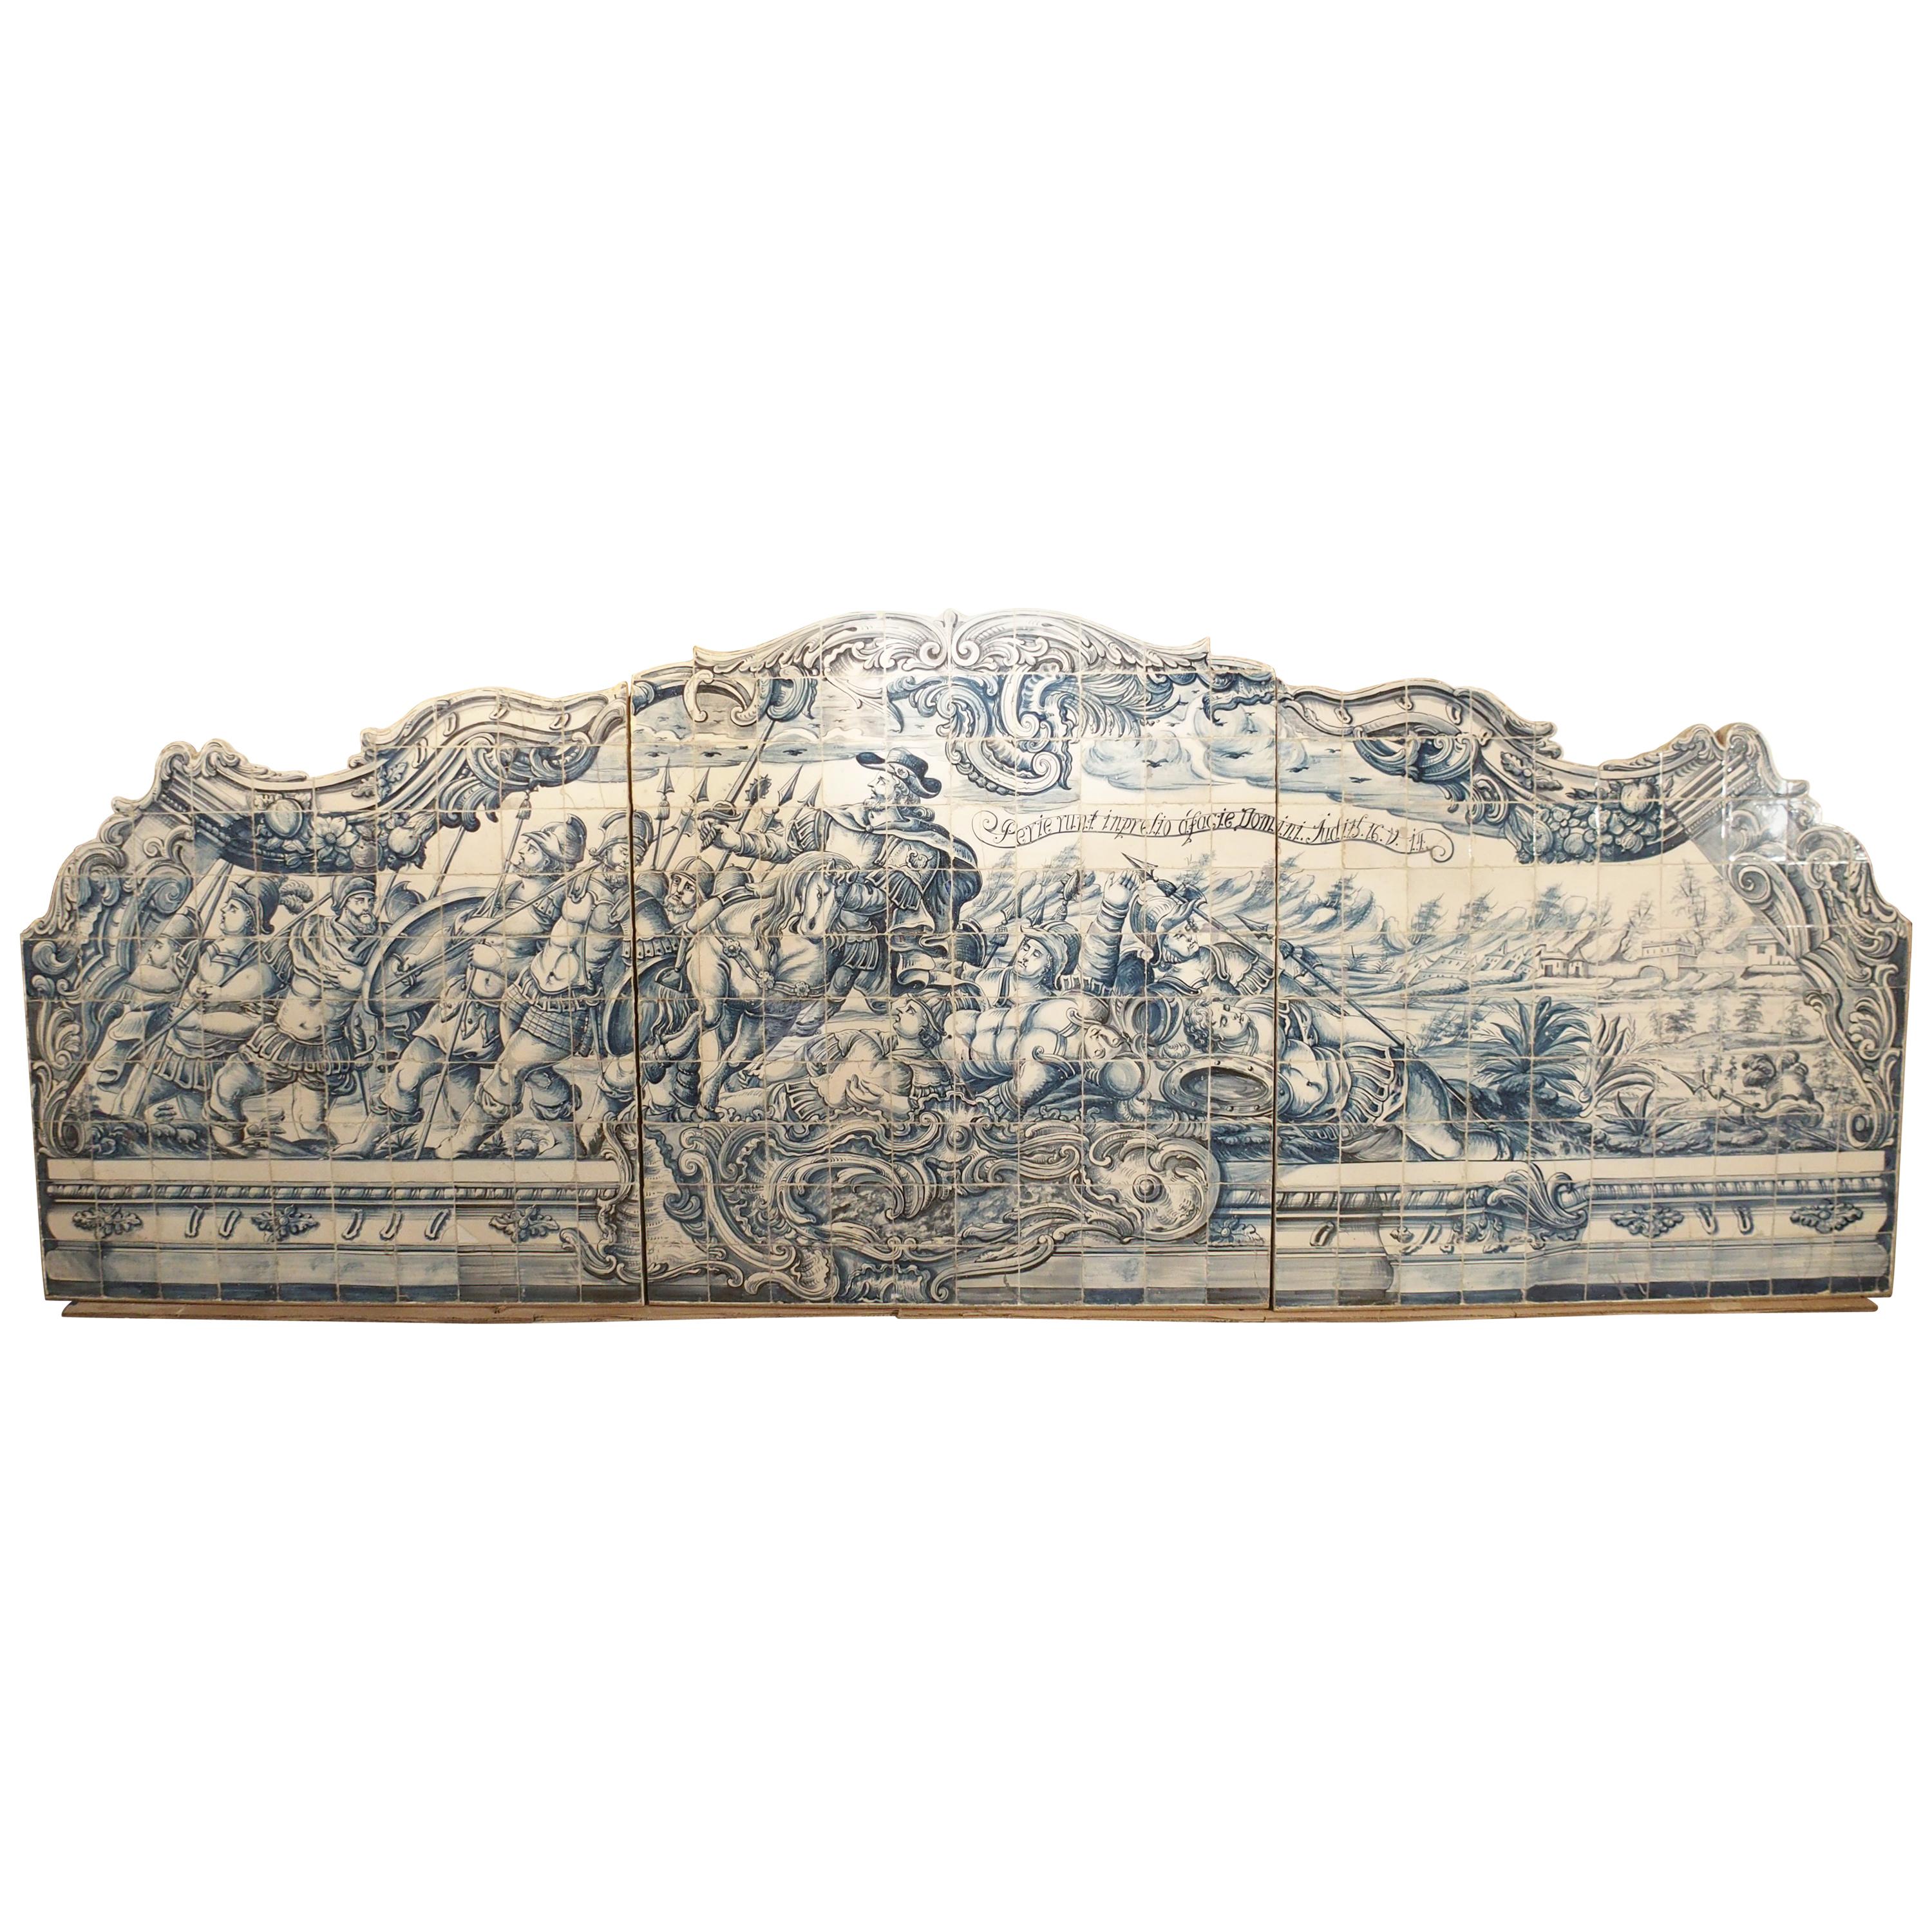 Monumentale 3-teilige Azulejo-Wandtafel aus Portugal aus dem 18. Jahrhundert